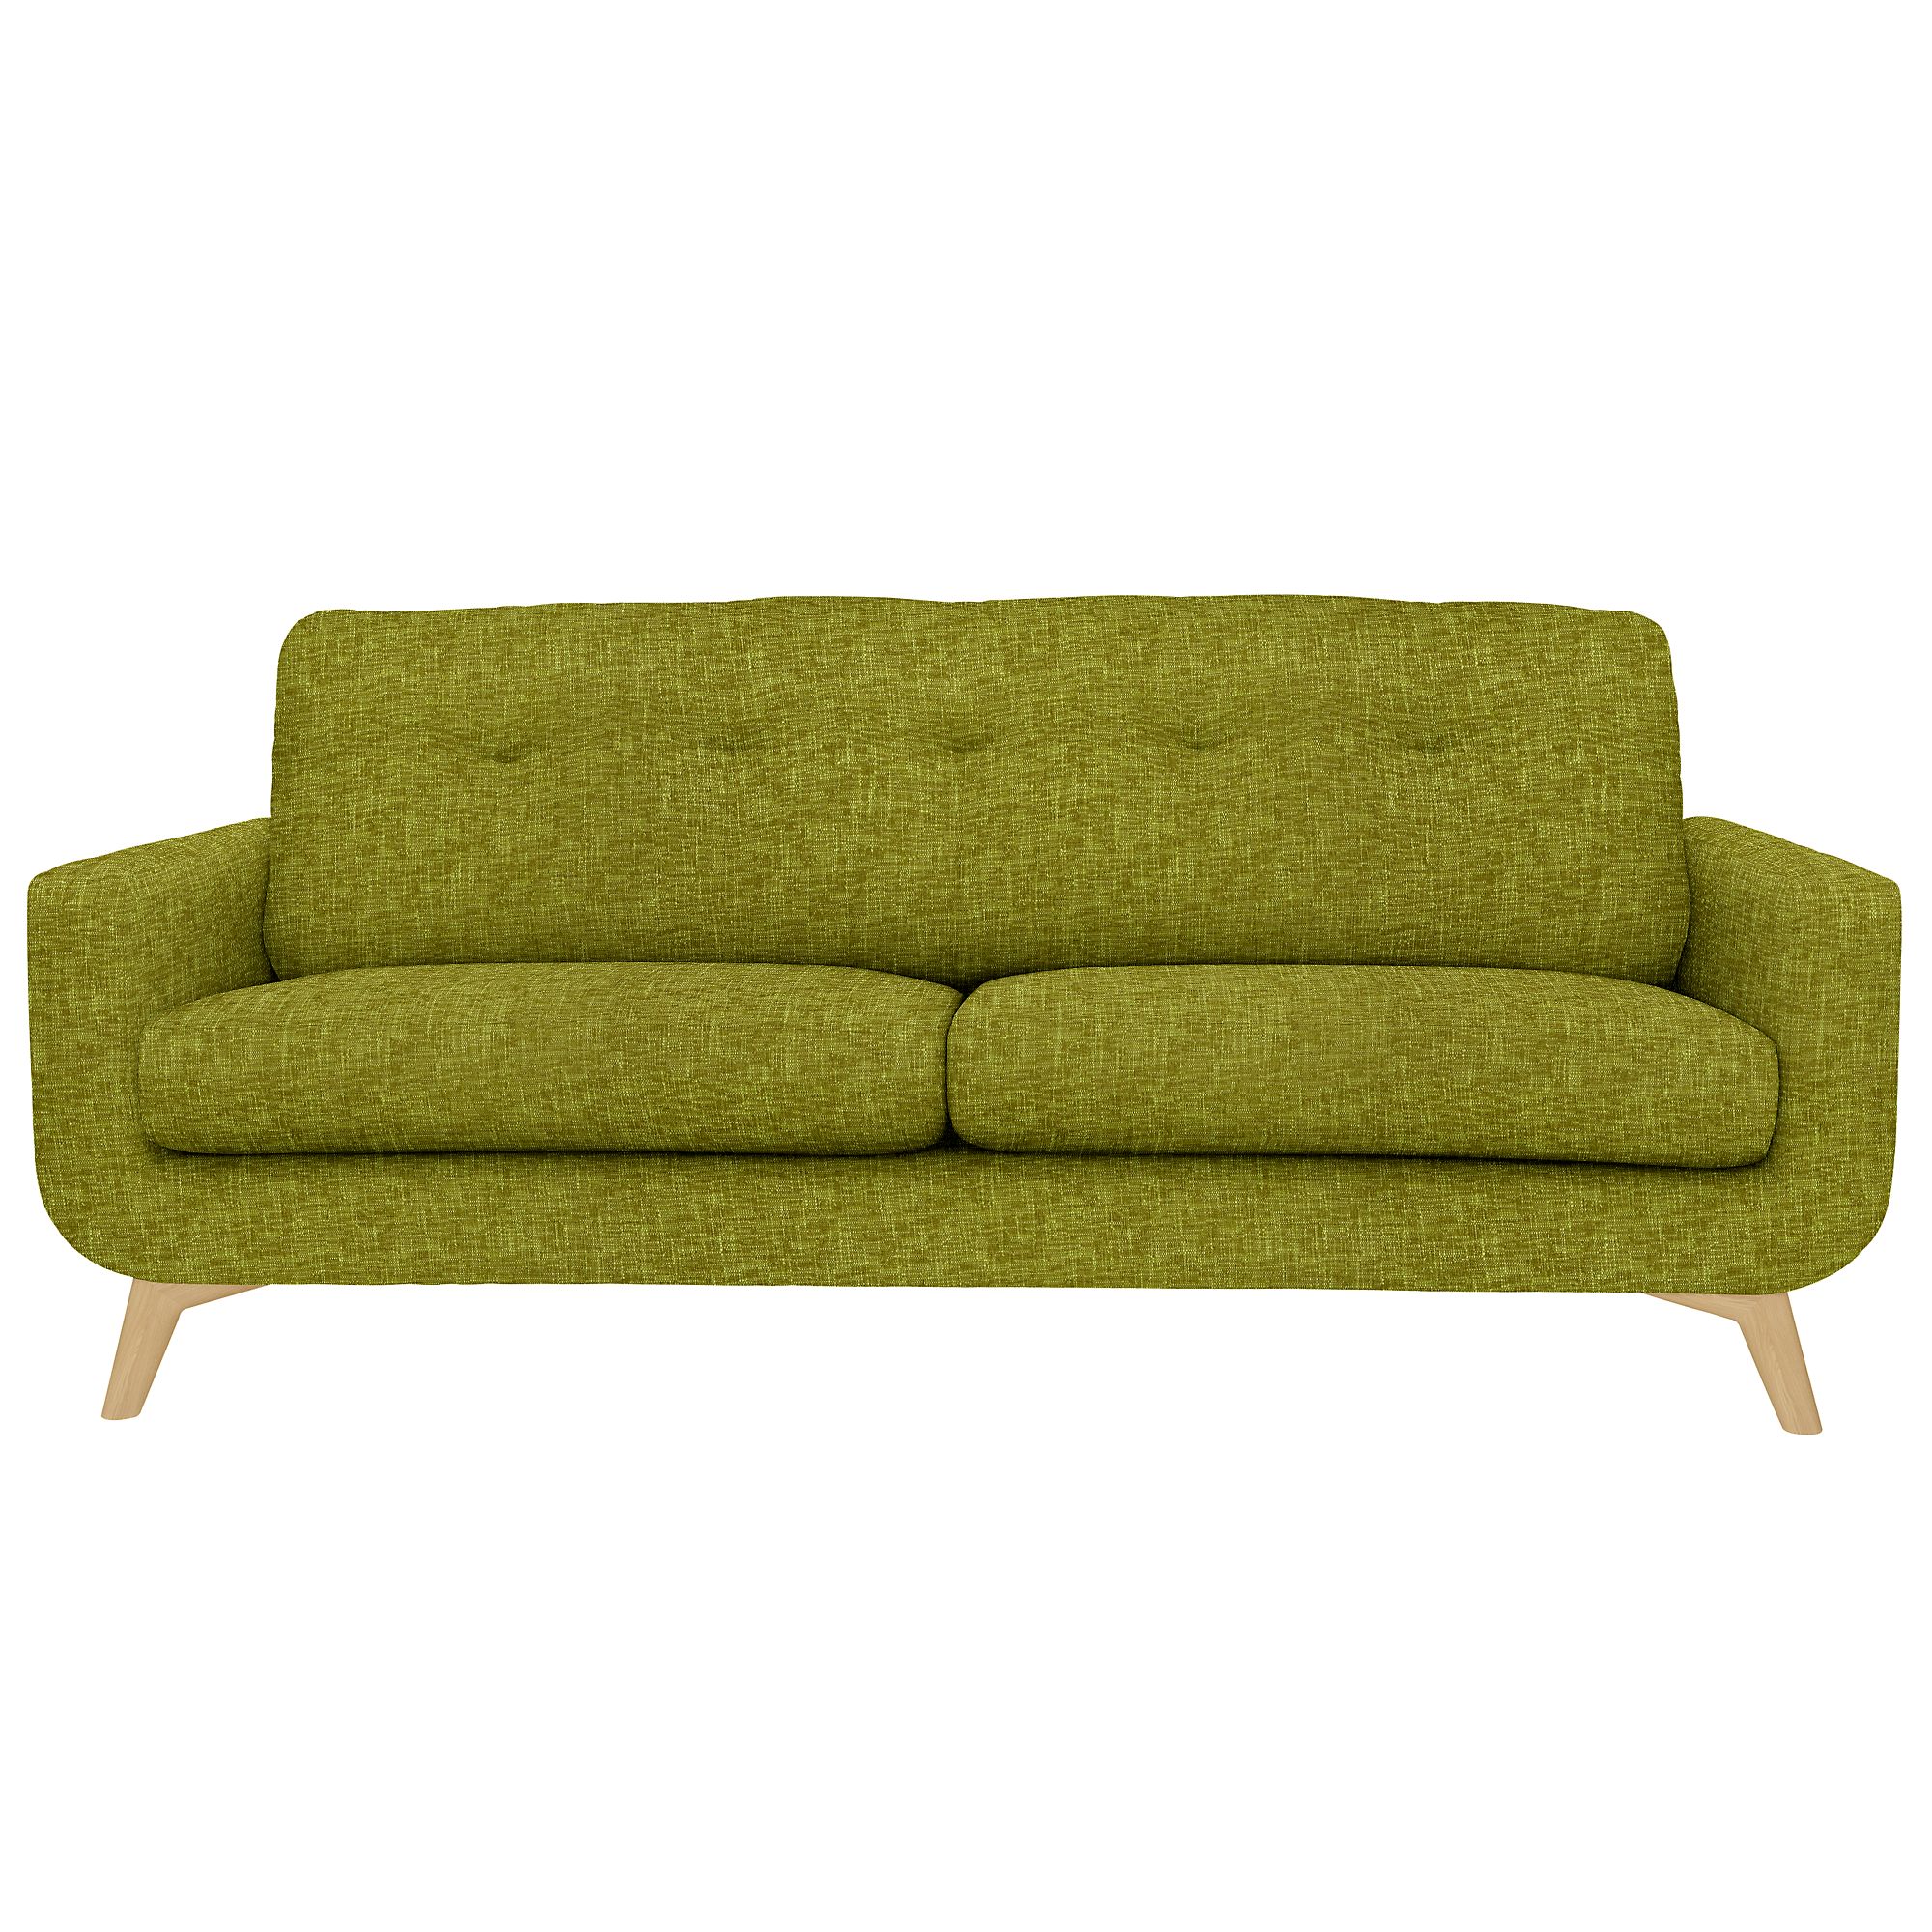 John Lewis Barbican Large Sofa with Light Legs,